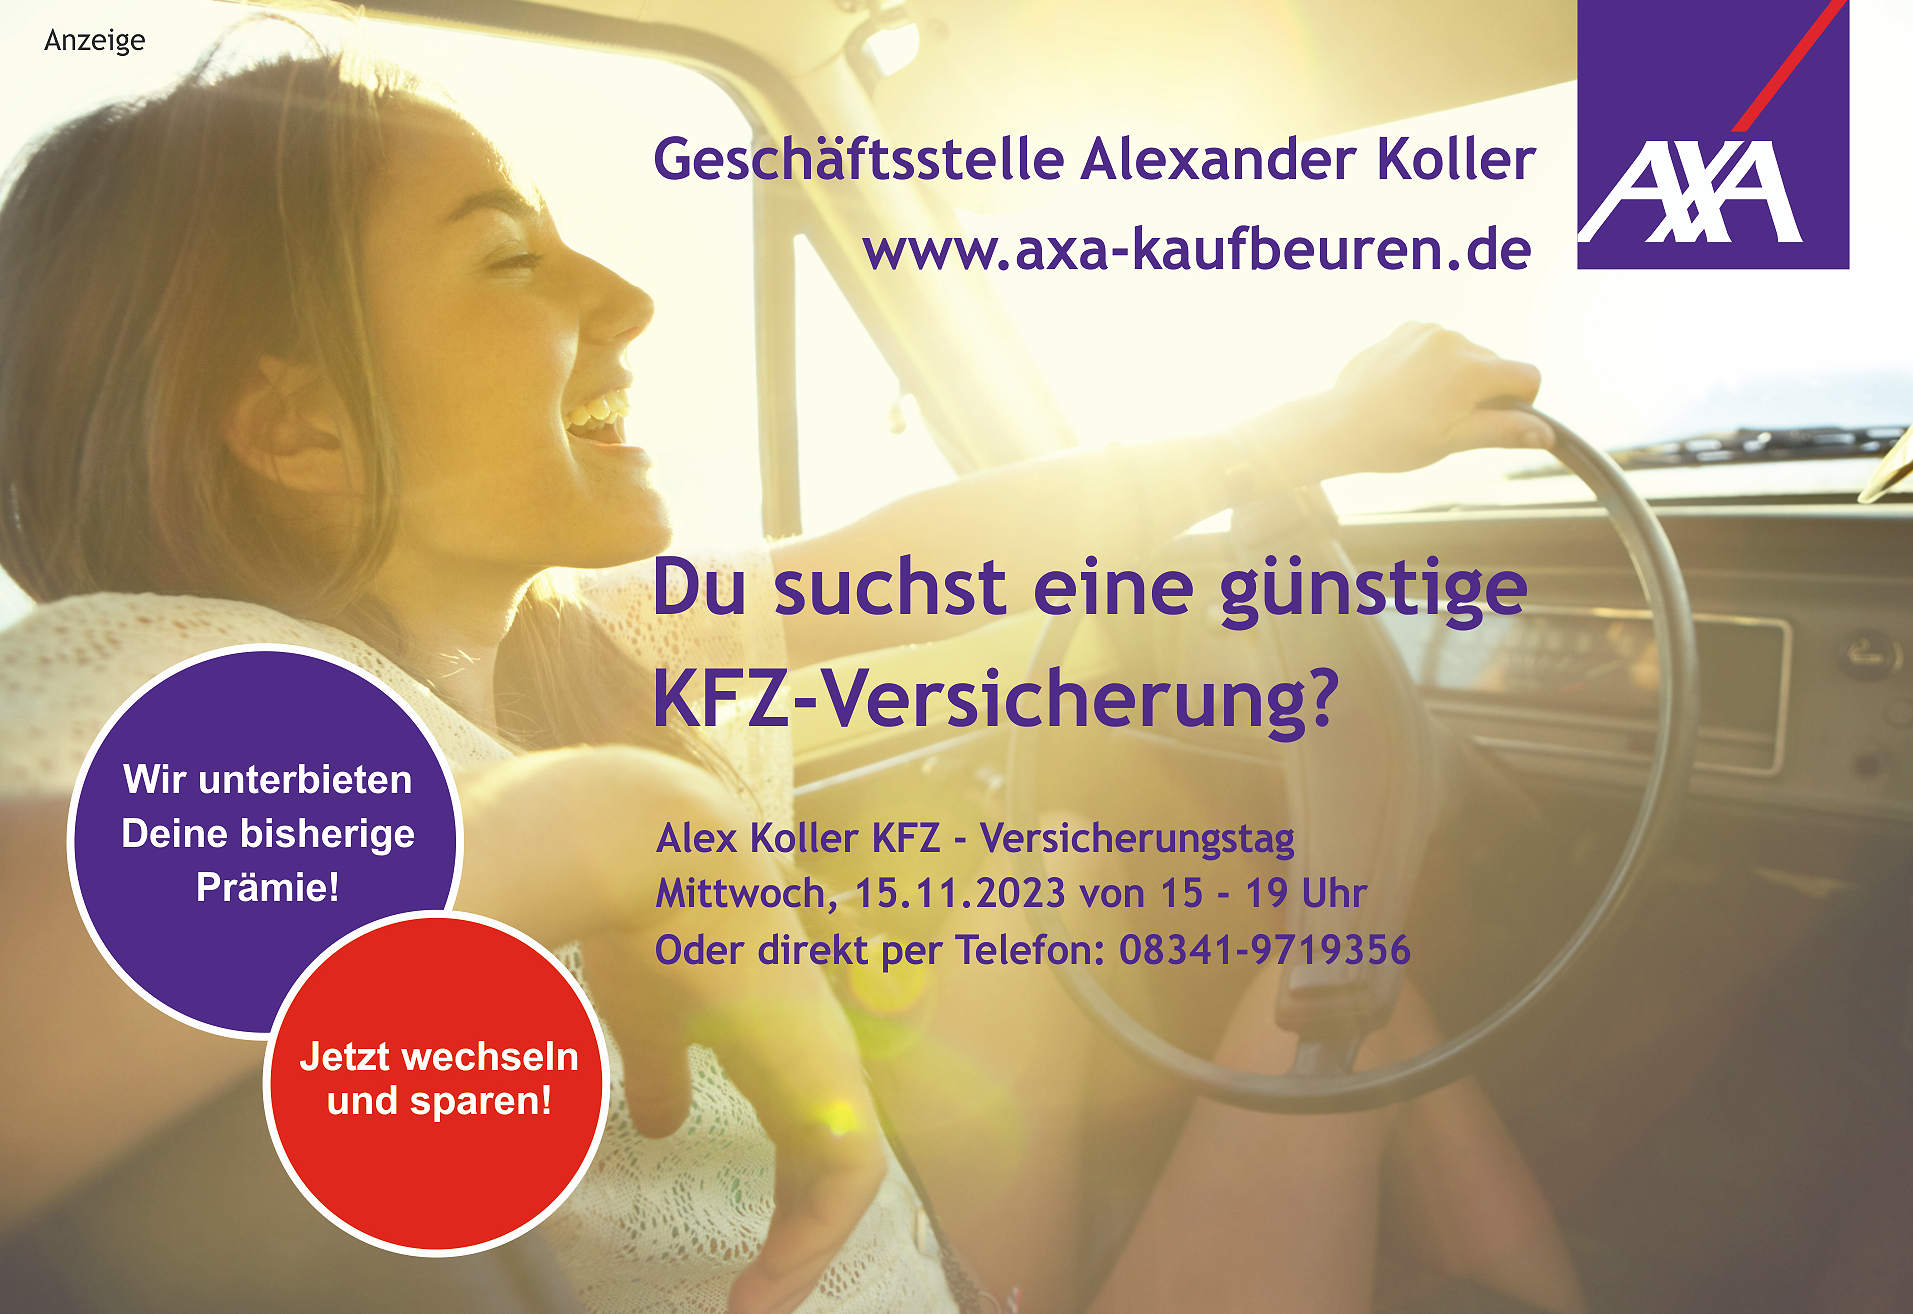 Anzeige: AXA Geschäftsstelle Alexander Koller in Kaufbeuren – Wir unterbieten Deine jetzige KFZ-Prämie!